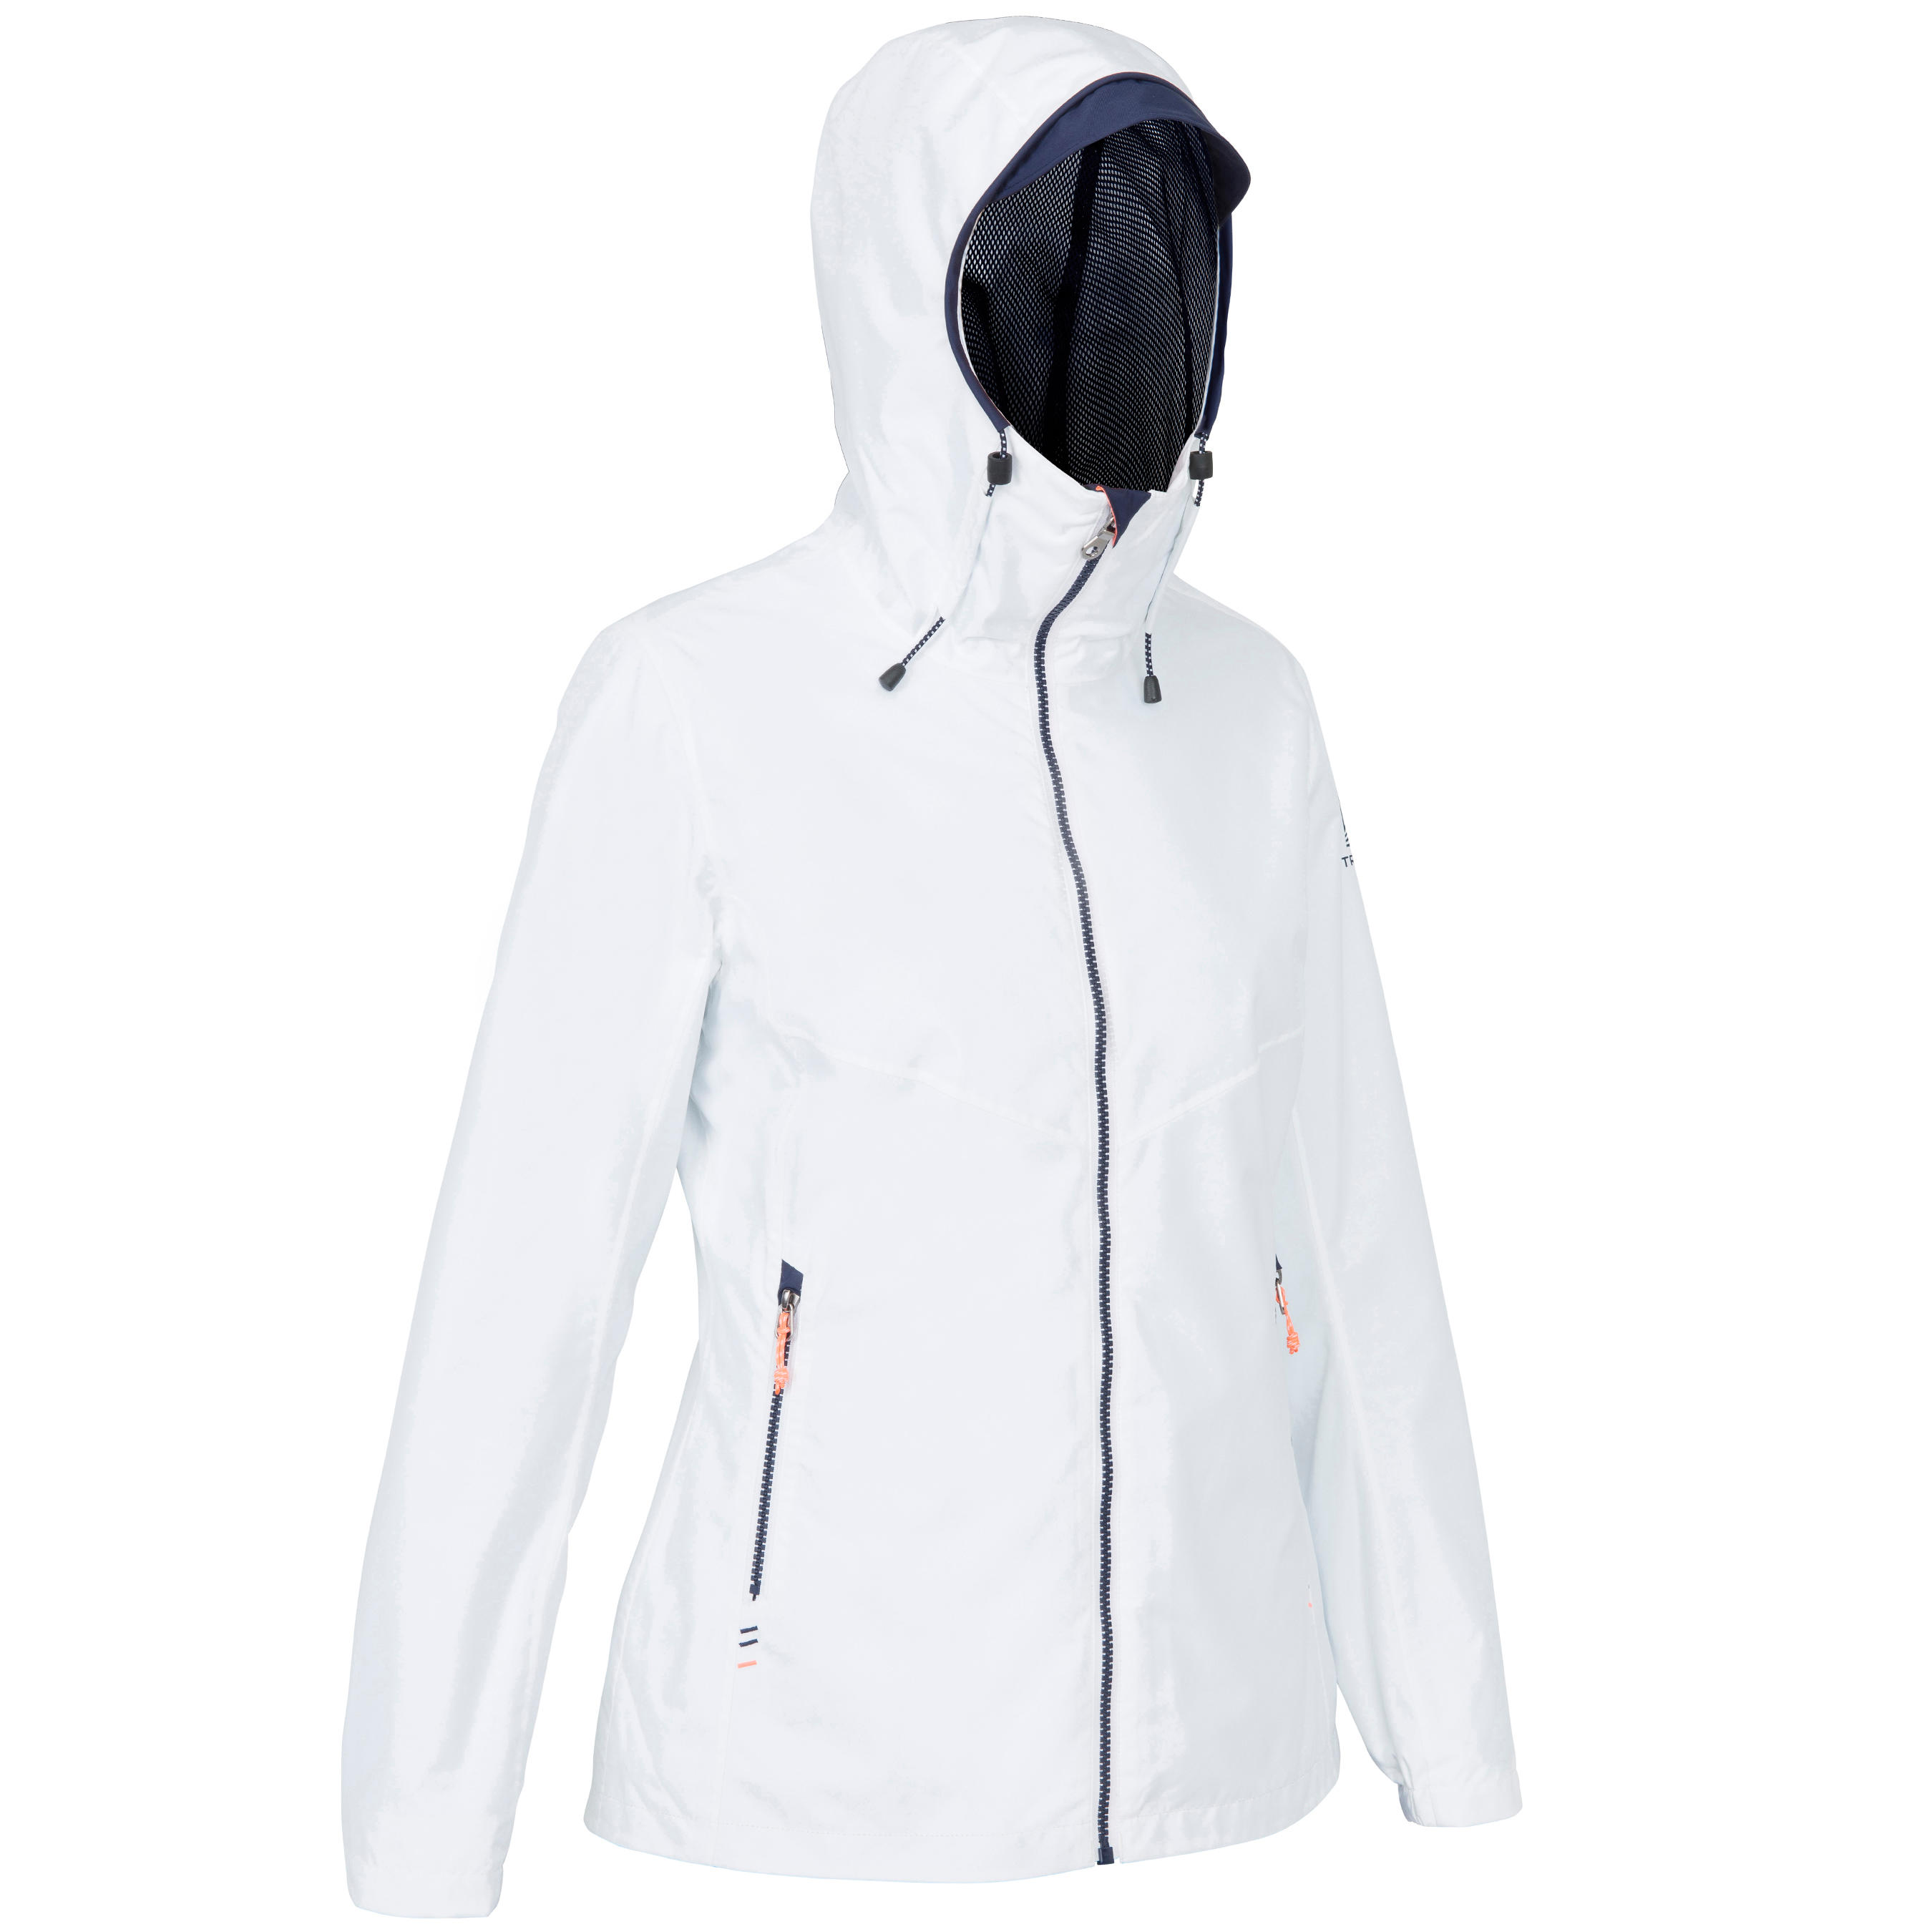 decathlon sailing jacket